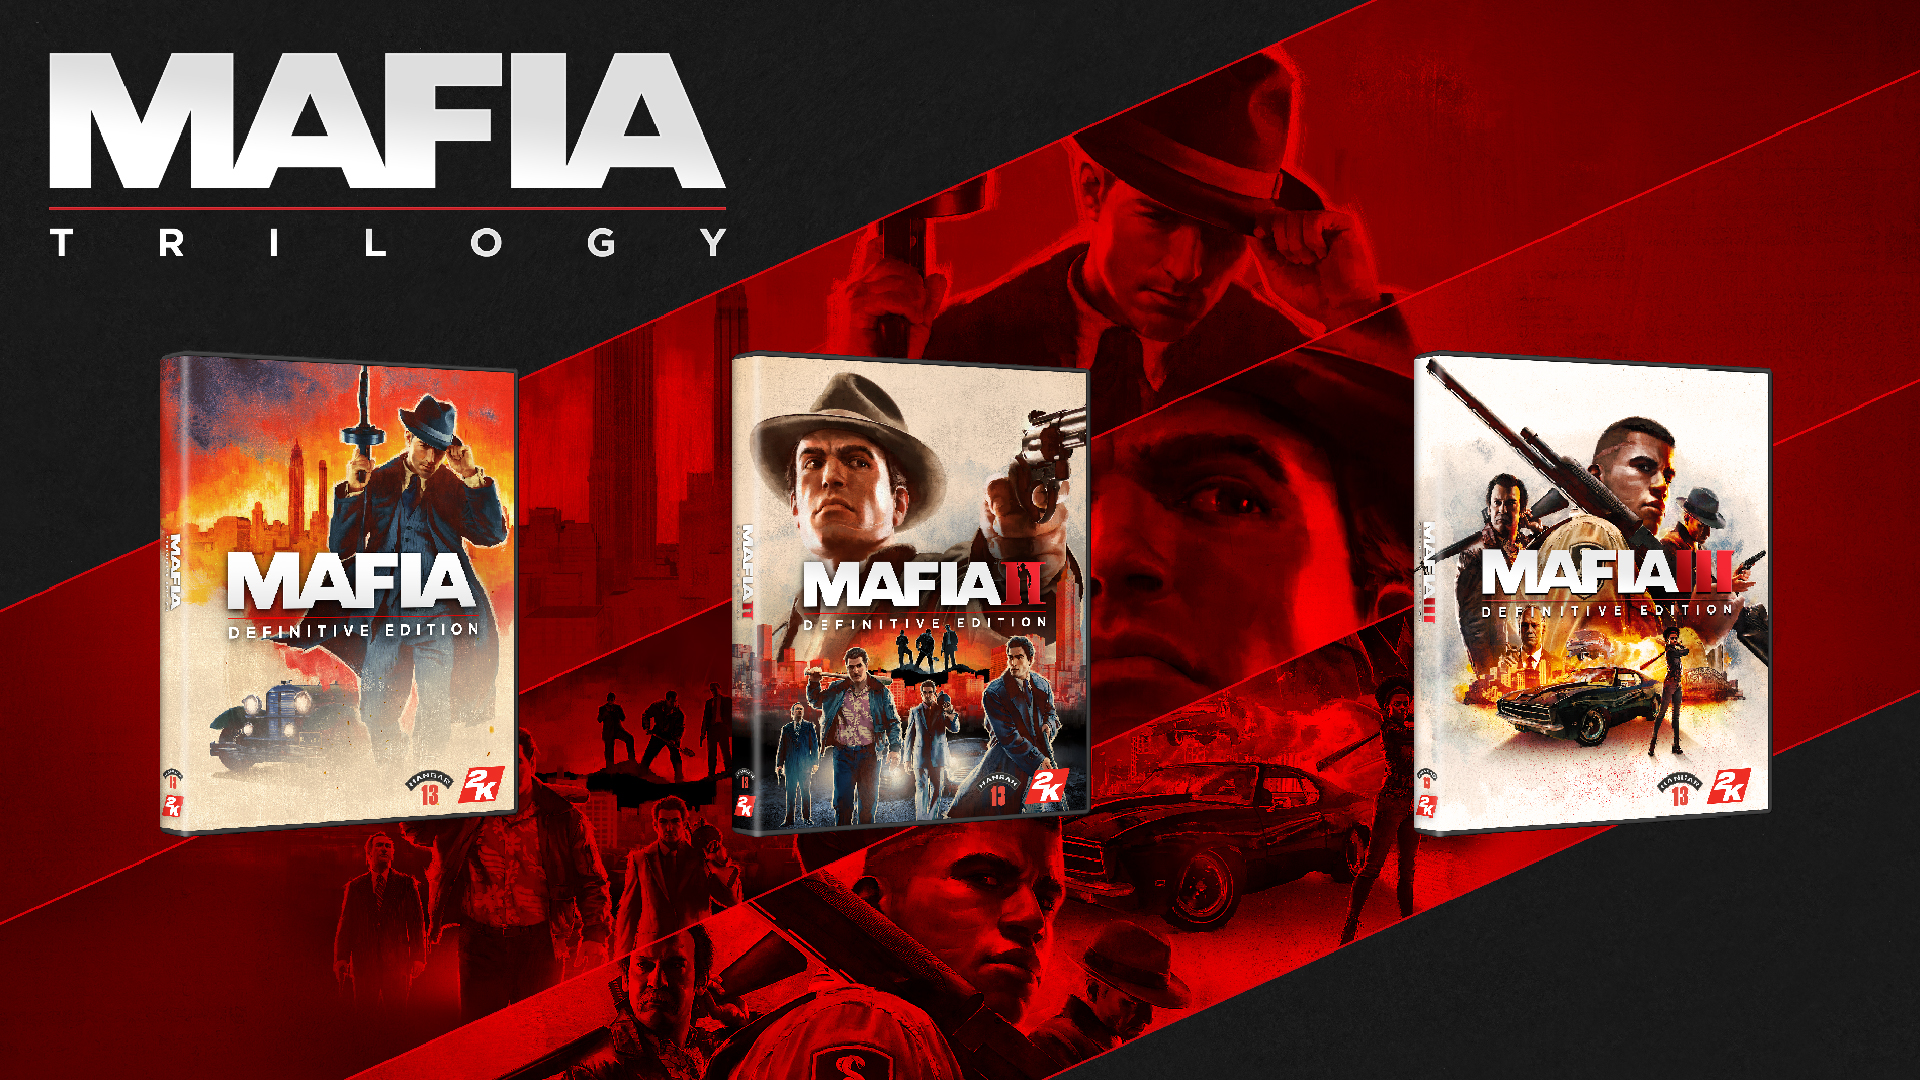 Mafia: Trilogy, Launch Trailer